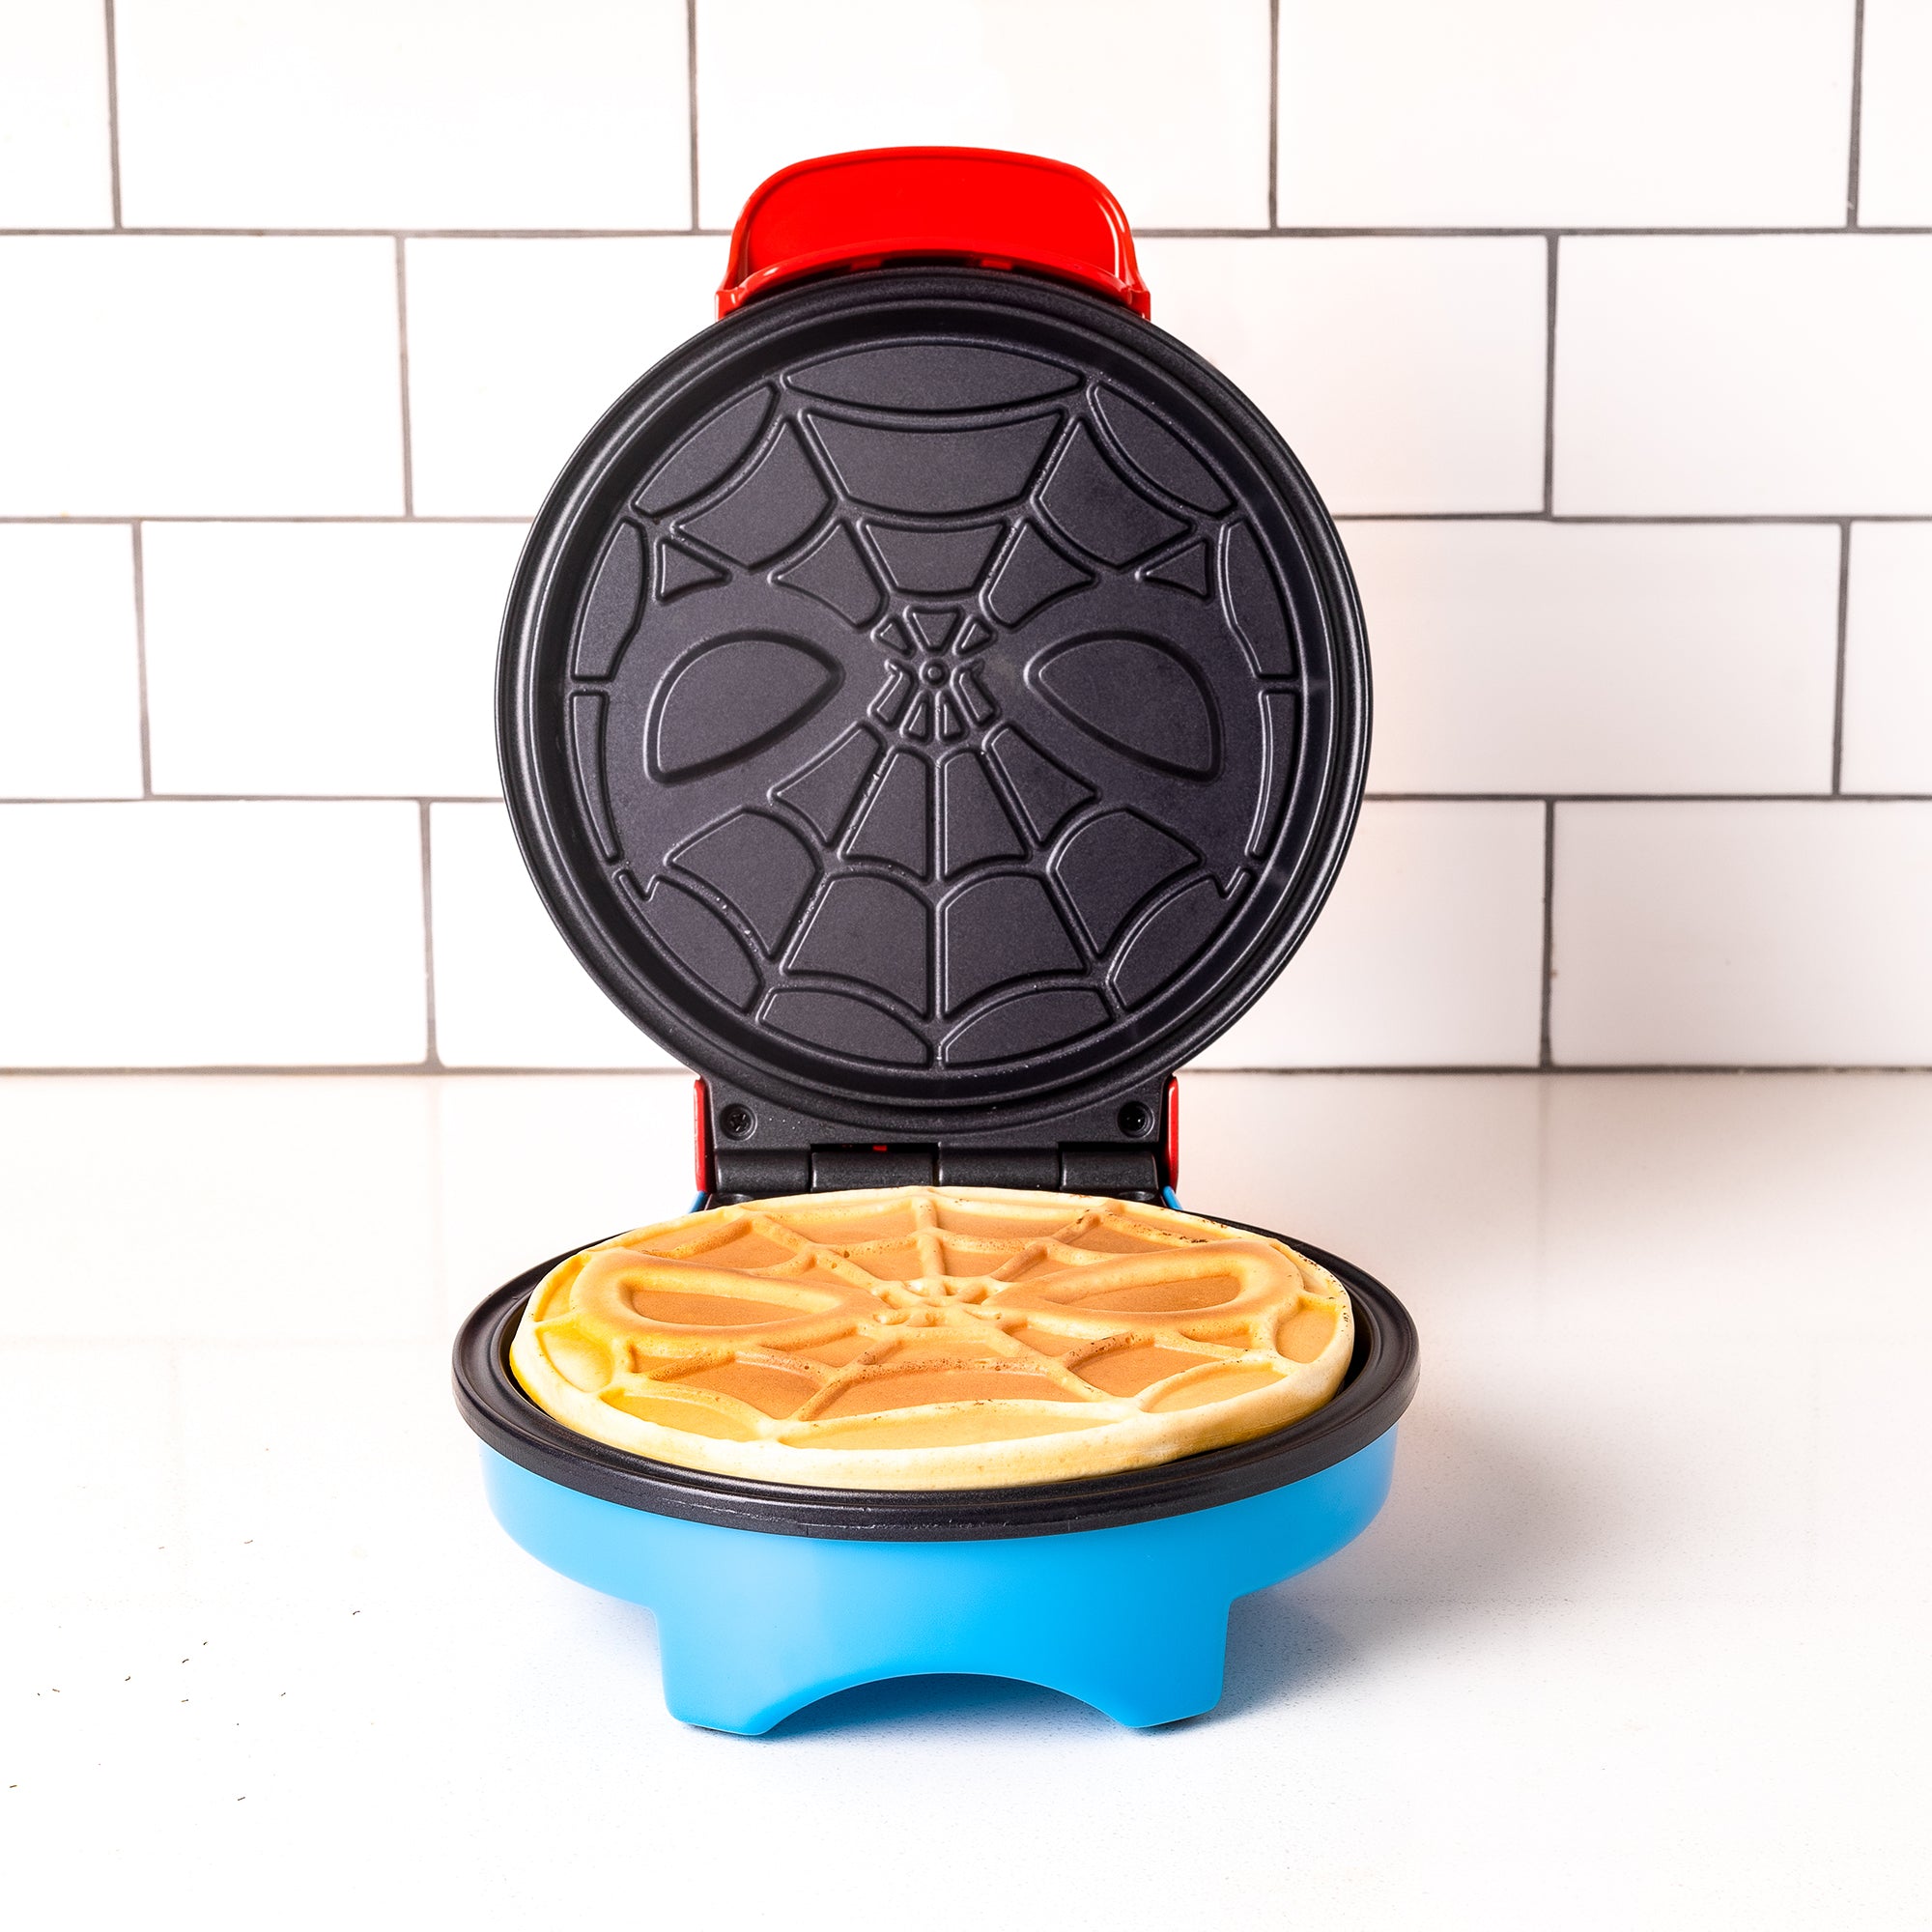 Dragon Ball Z Waffle Maker by Uncanny Brands